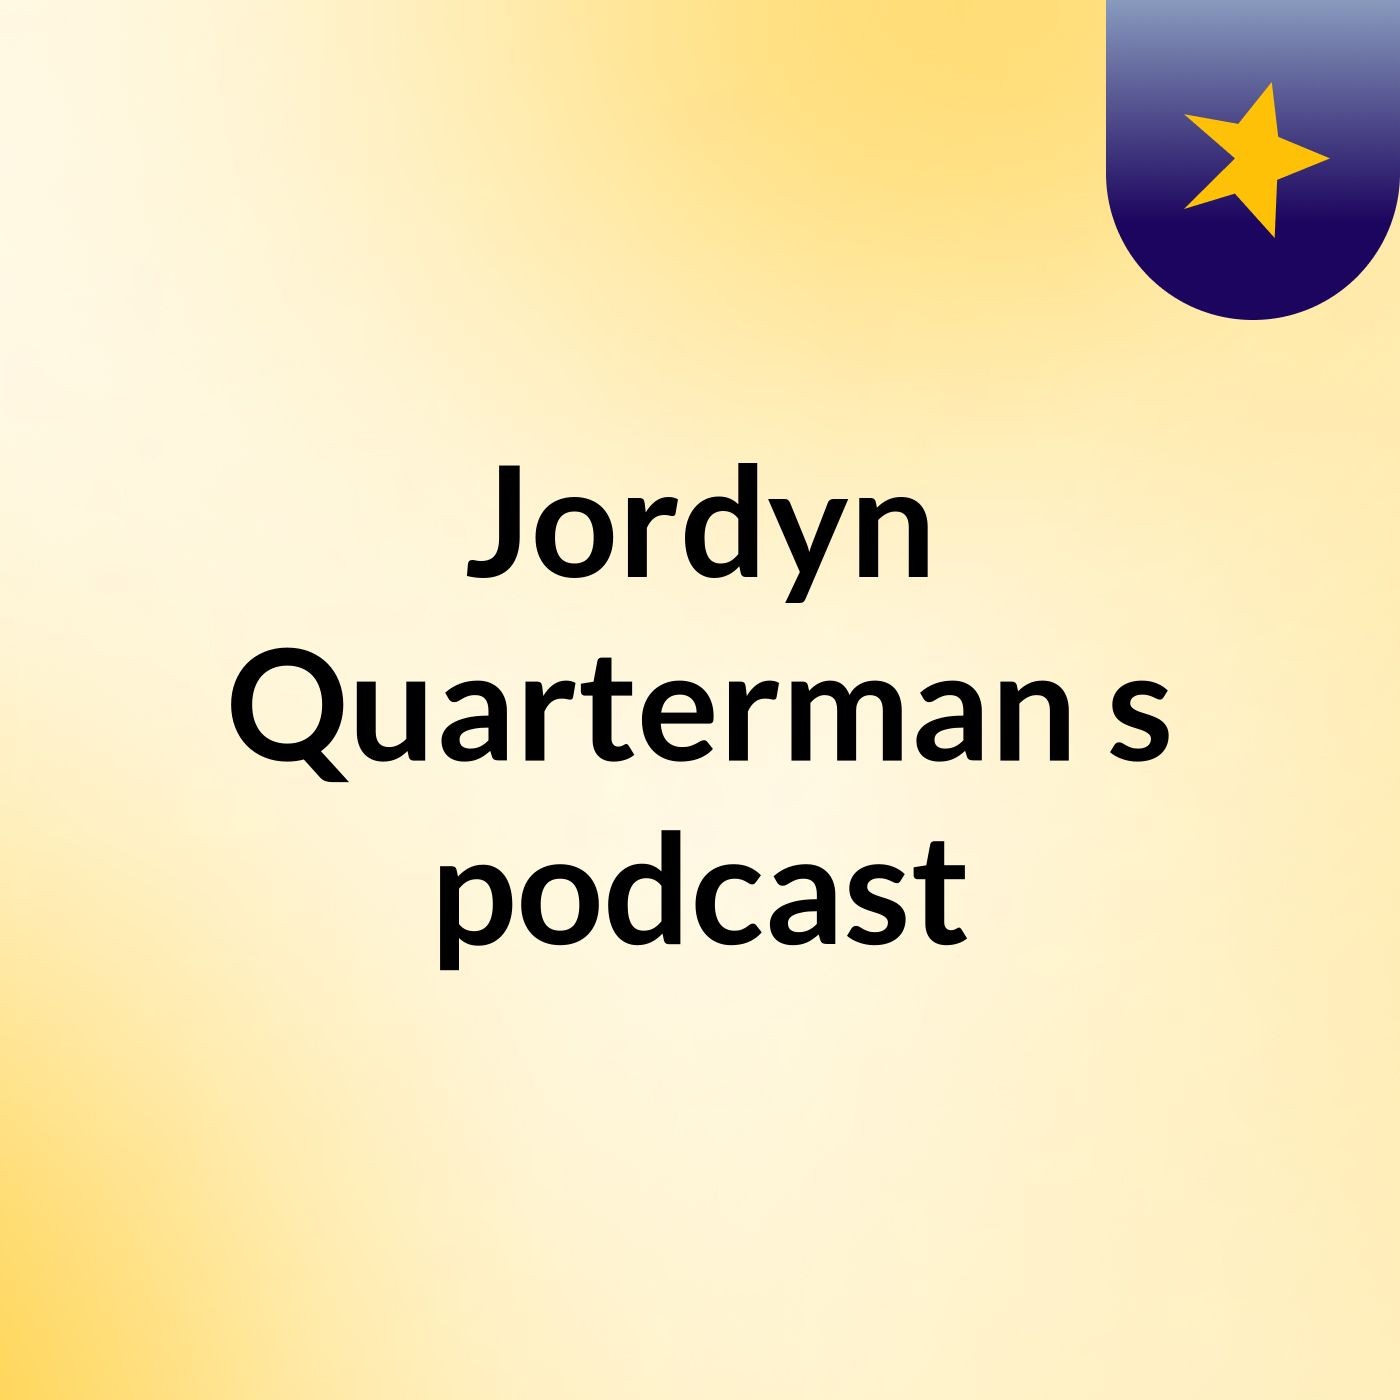 Jordyn Quarterman's podcast